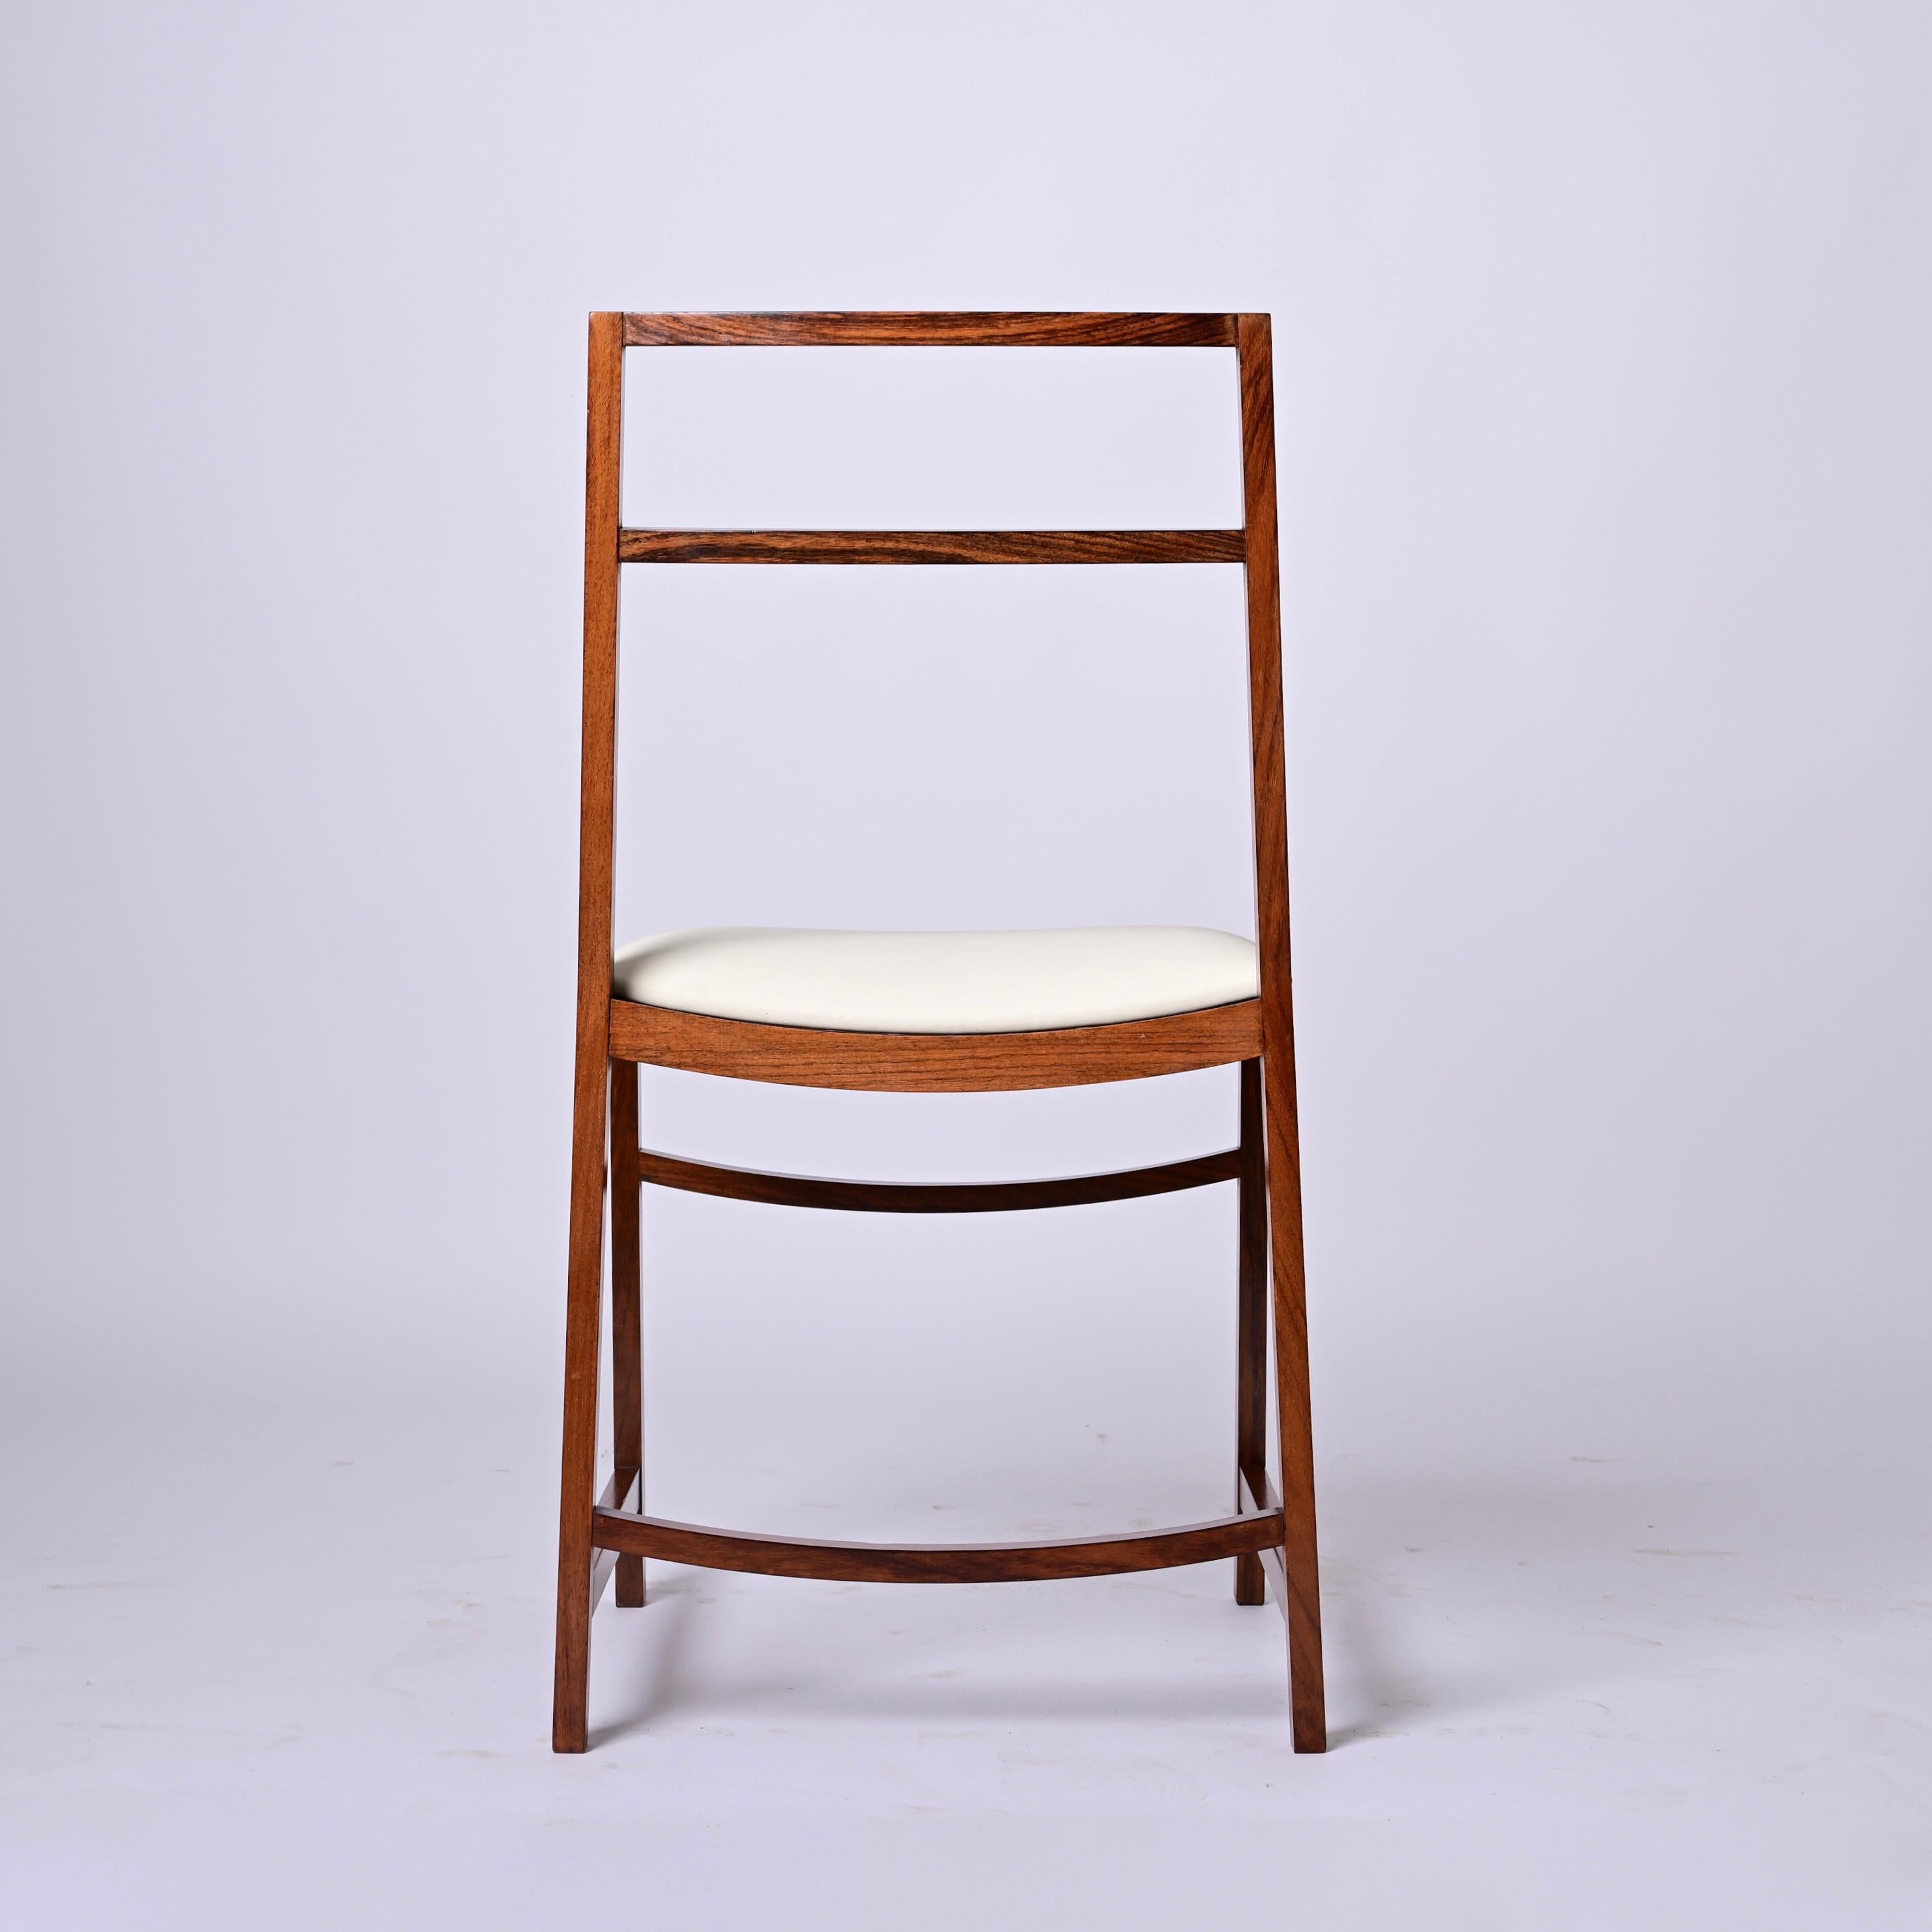 Midcentury Italian Dining Chairs in Teak, Renato Venturi for MIM Roma, 1960s For Sale 12